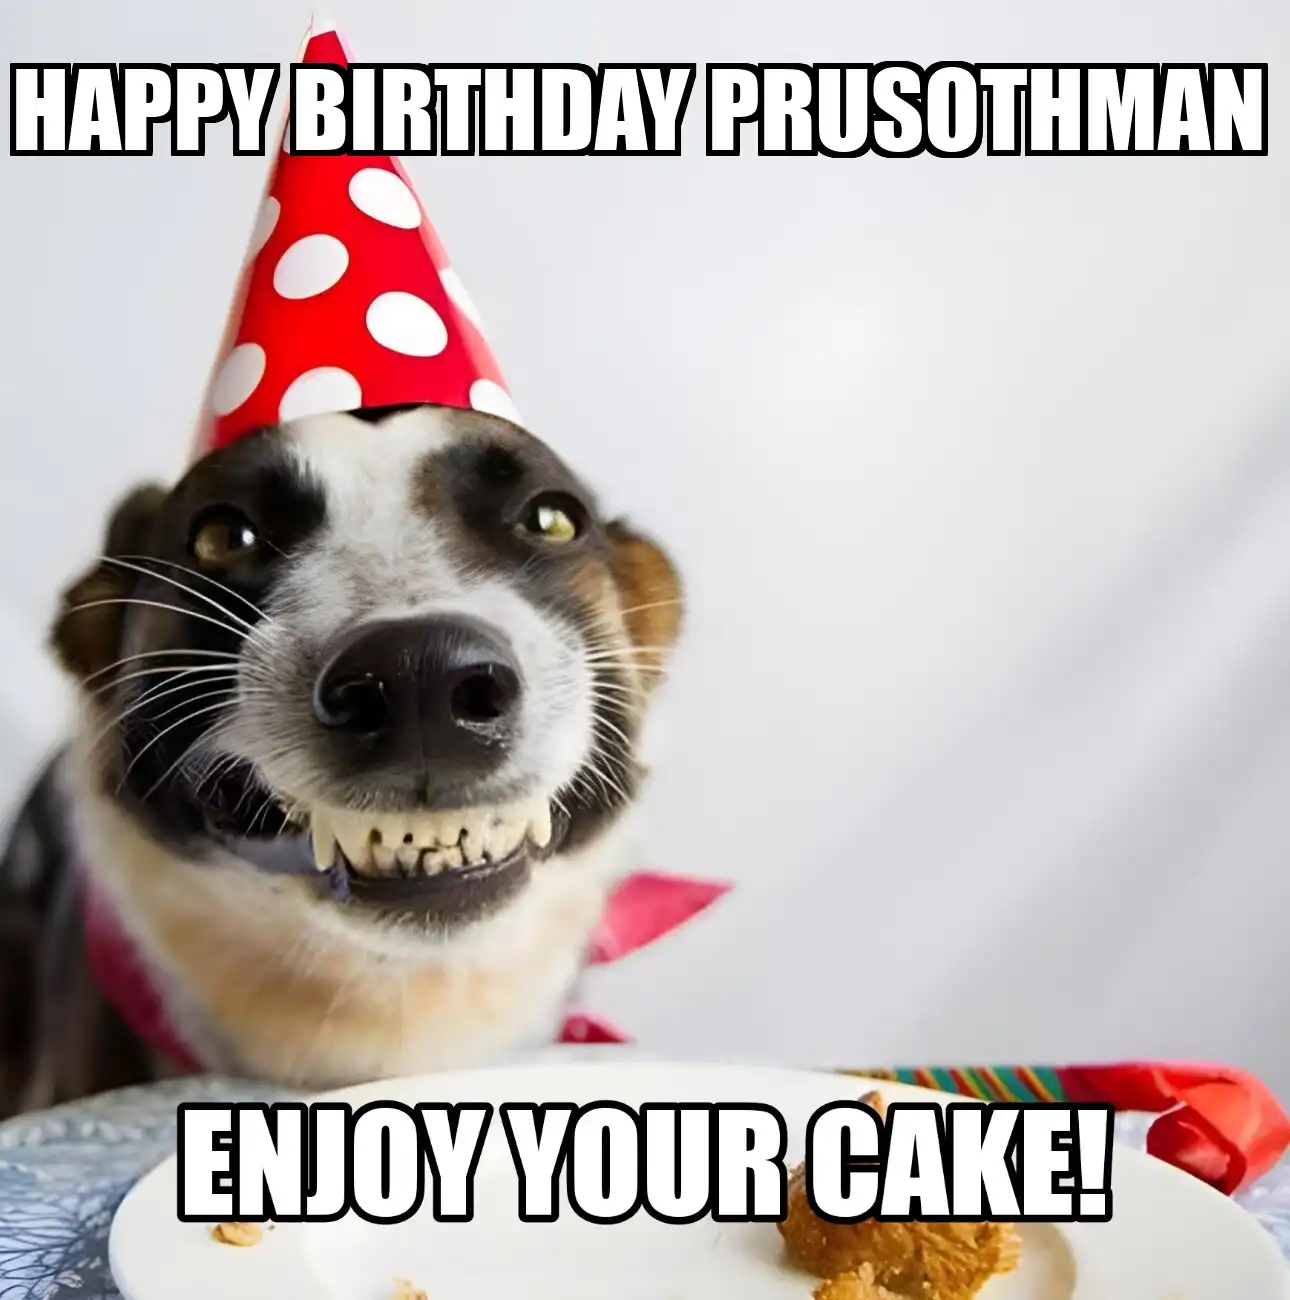 Happy Birthday Prusothman Enjoy Your Cake Dog Meme